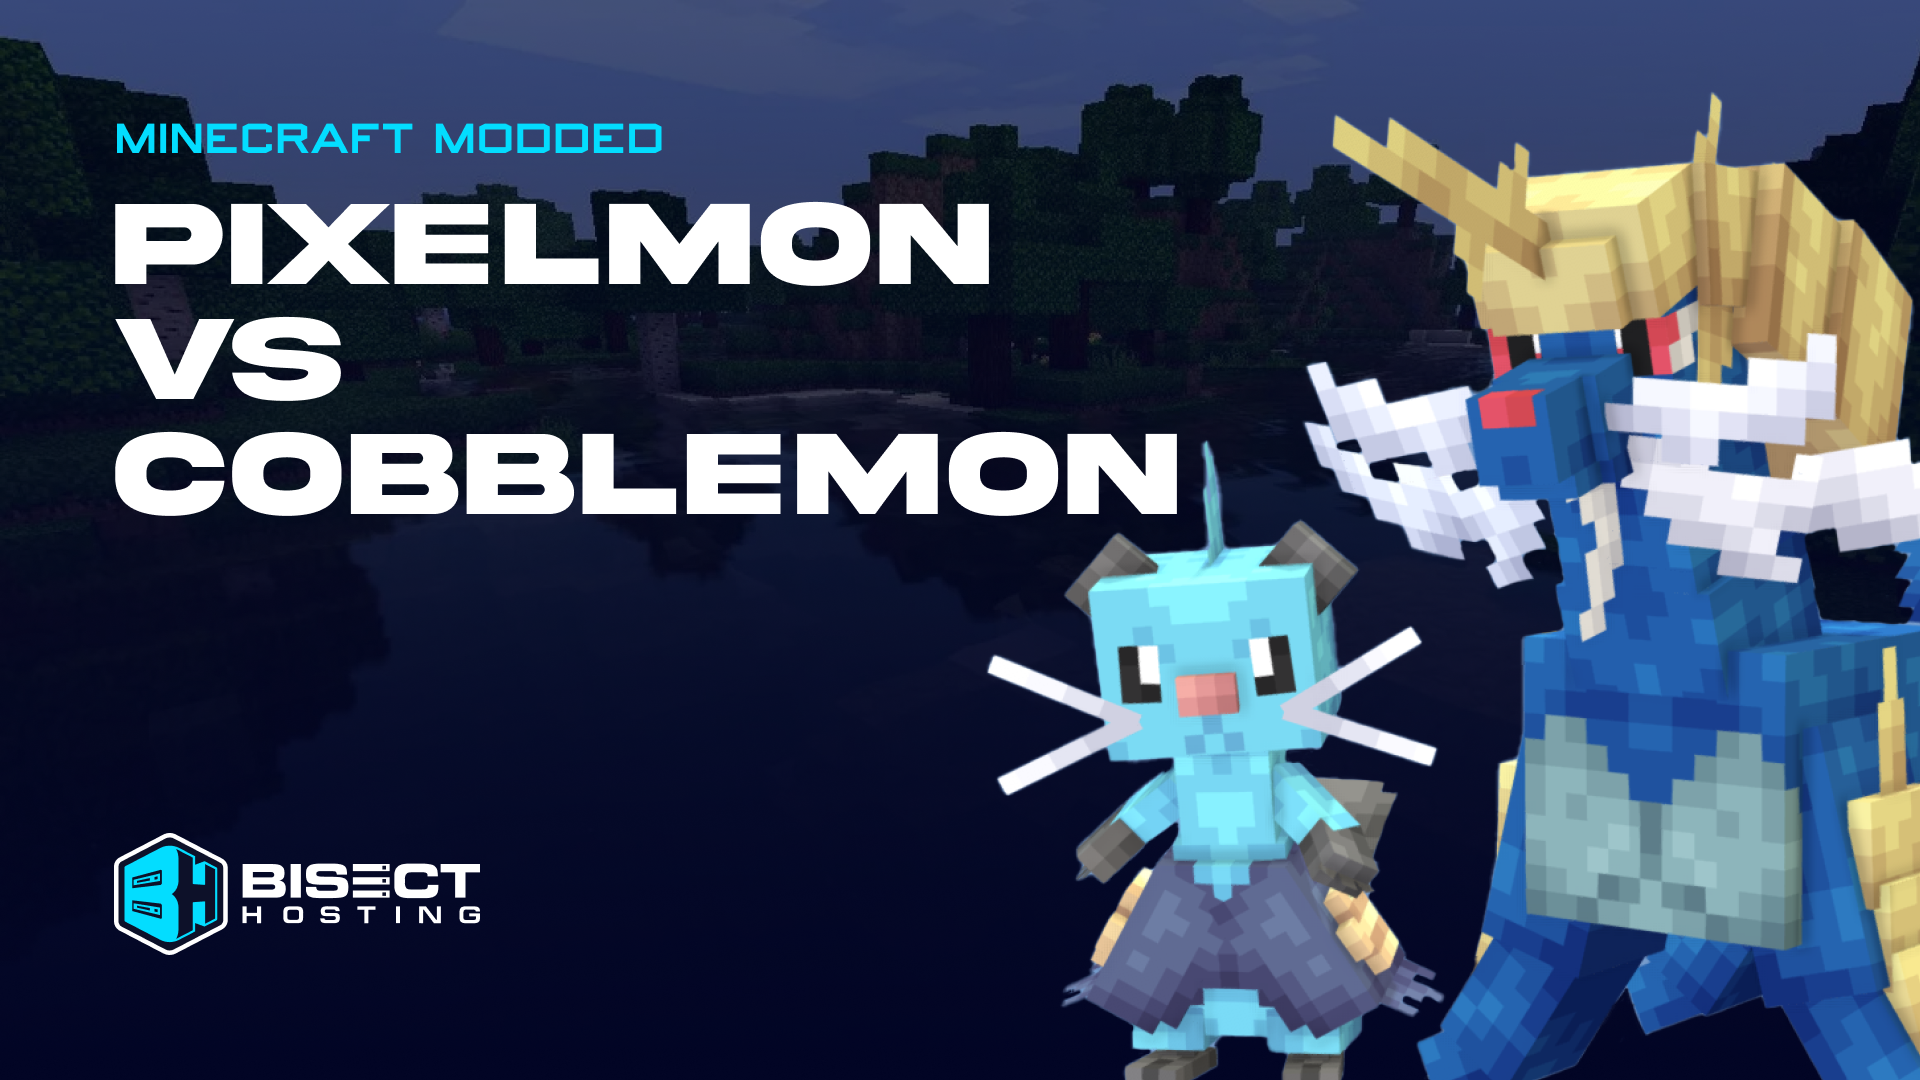 MUUUUUITO melhor q pixelmon!!! #pokemkn #minecraft #cobblemon #vtuber